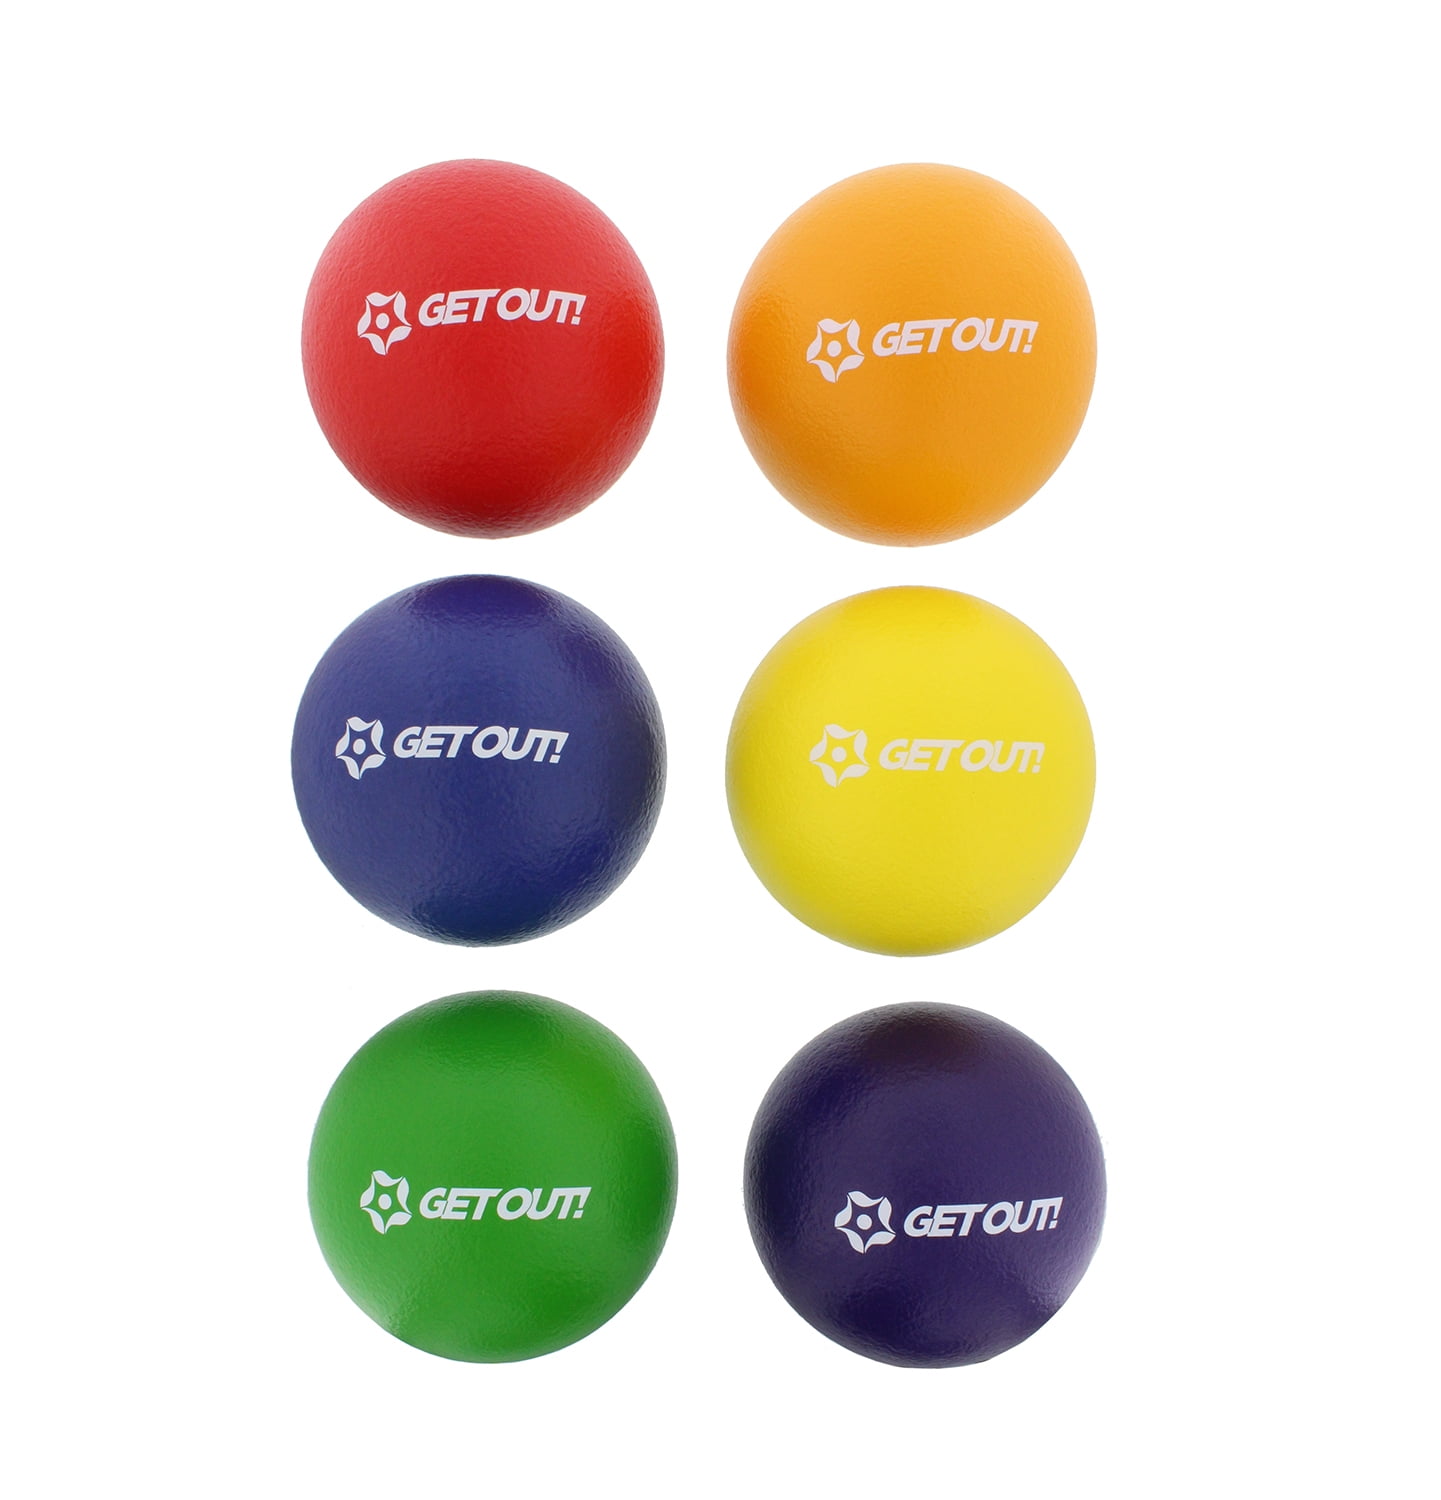 6” Inch Soft Latex-Free Foam Dodgeball Balls 6-Pack Set in Green 